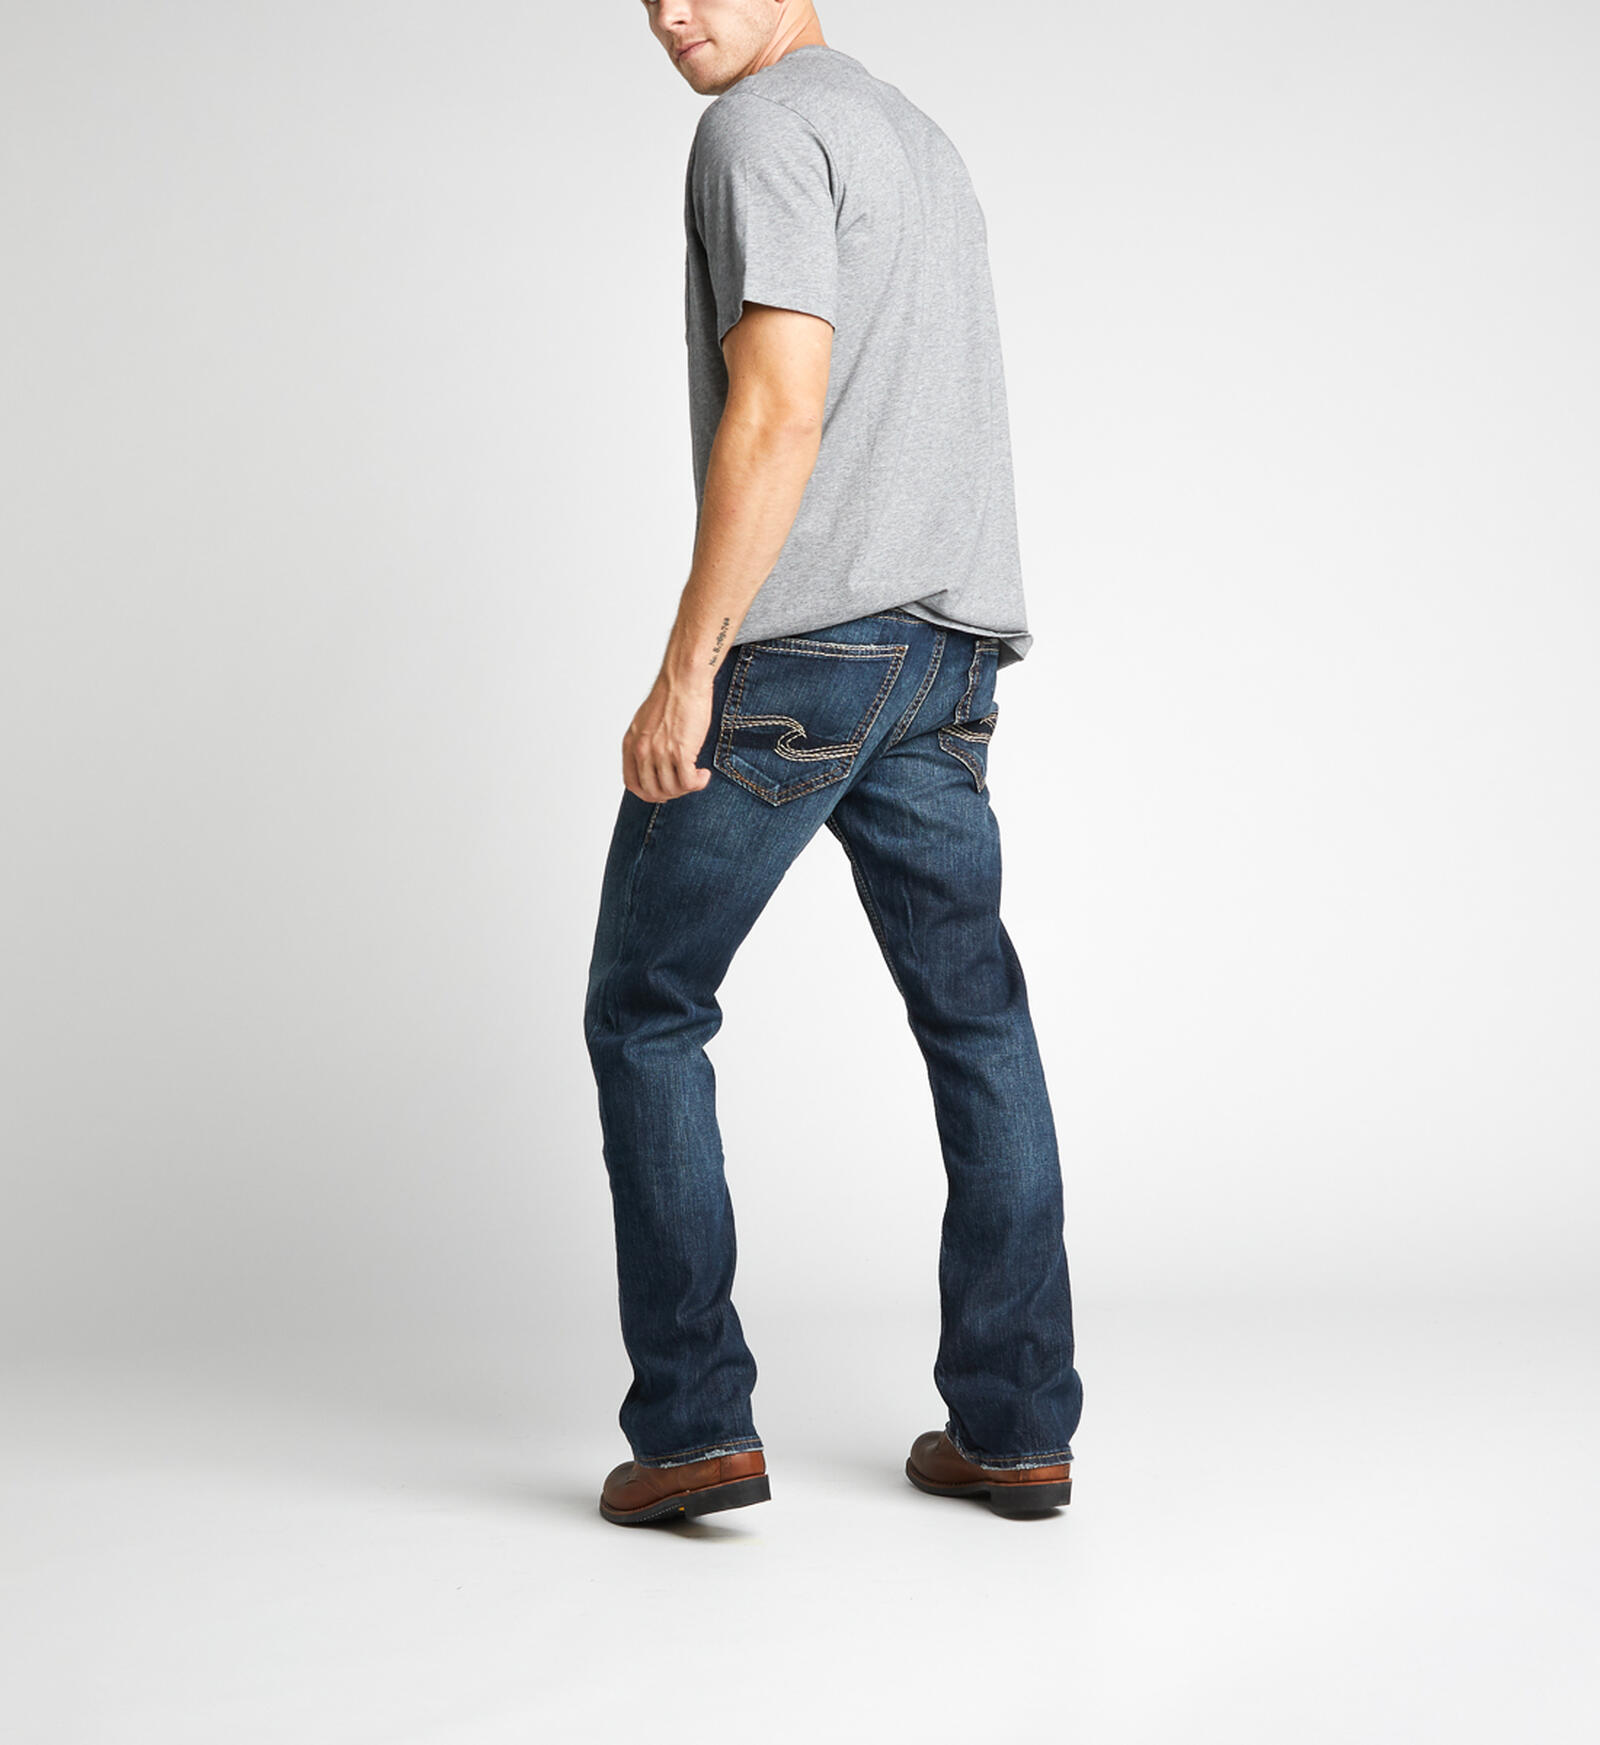 Silver Jeans® Men's Zac Dark Wash Jeans